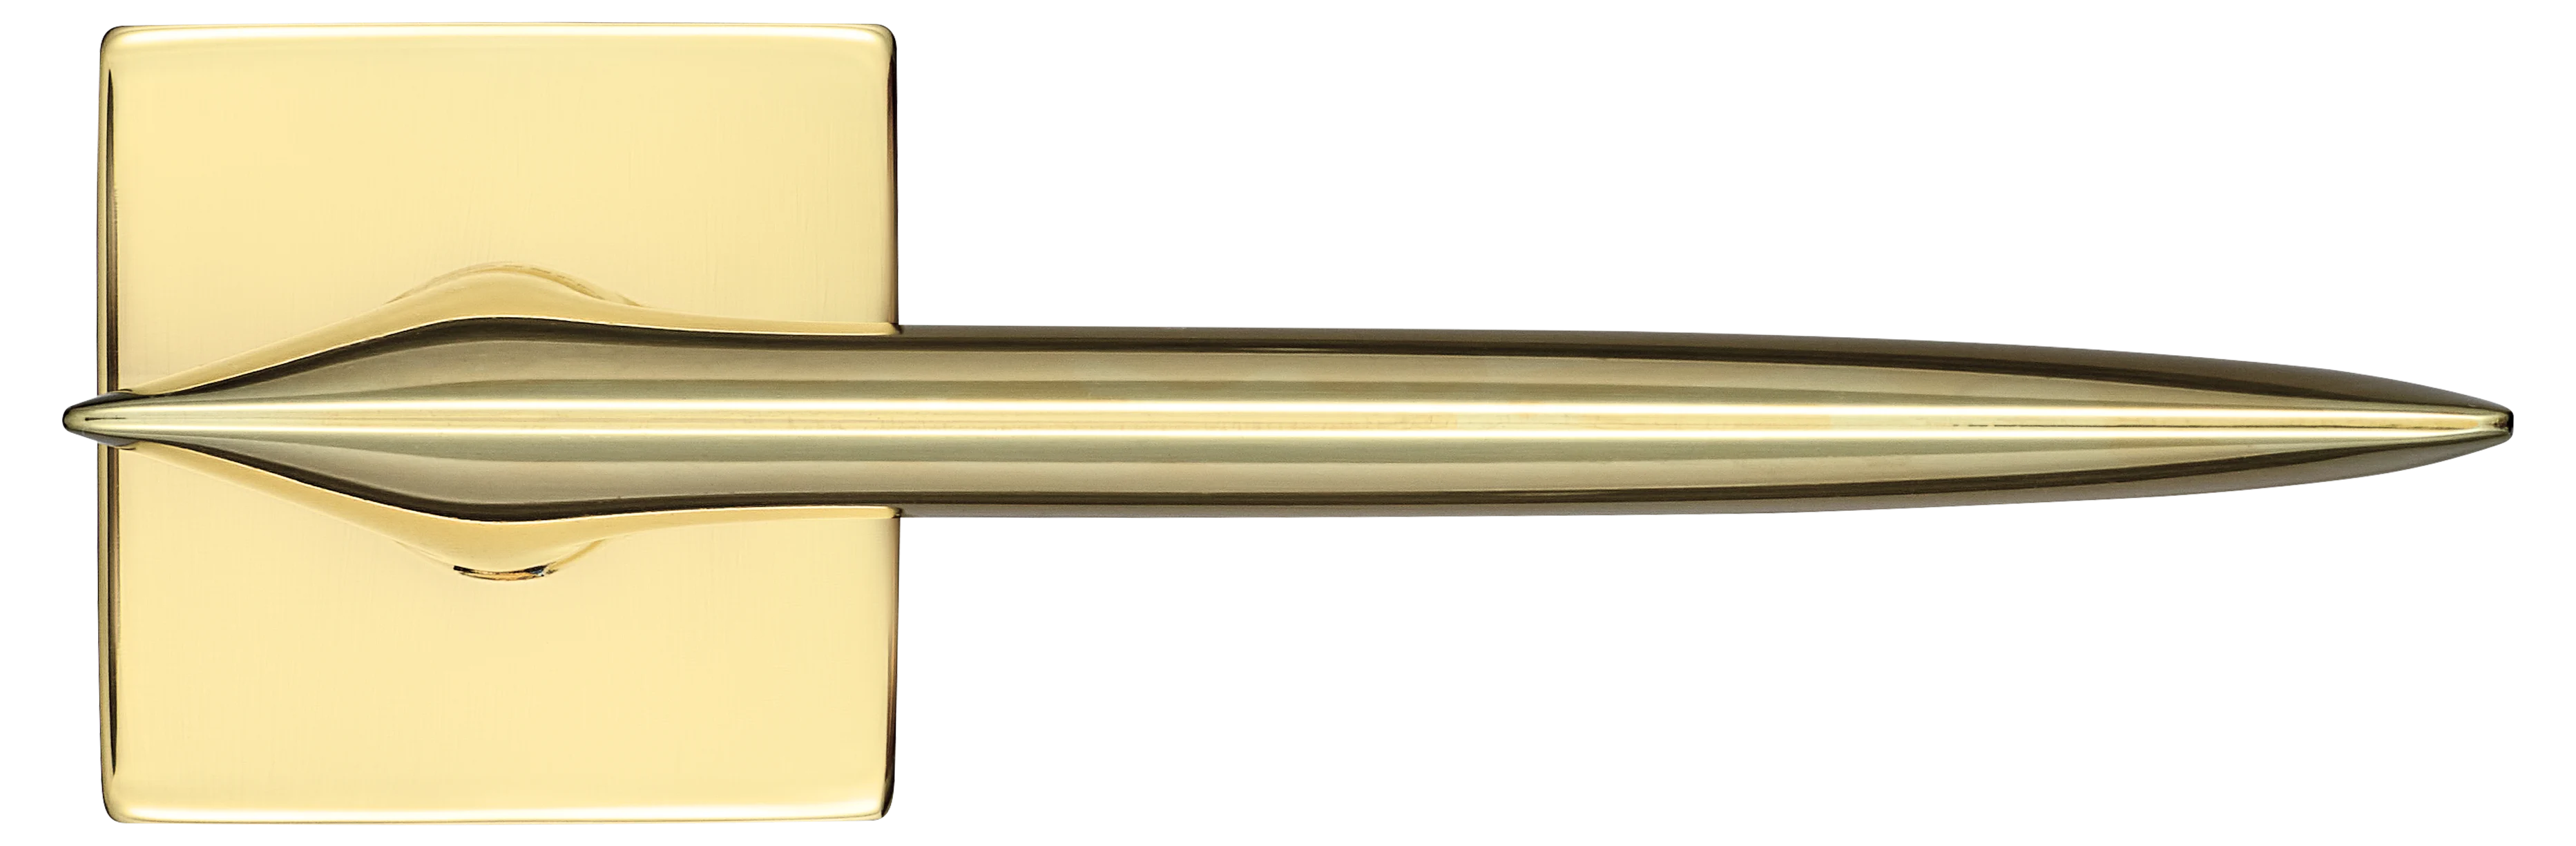 GALACTIC S5 OTL, ручка дверная, цвет -  золото фото купить в Москве